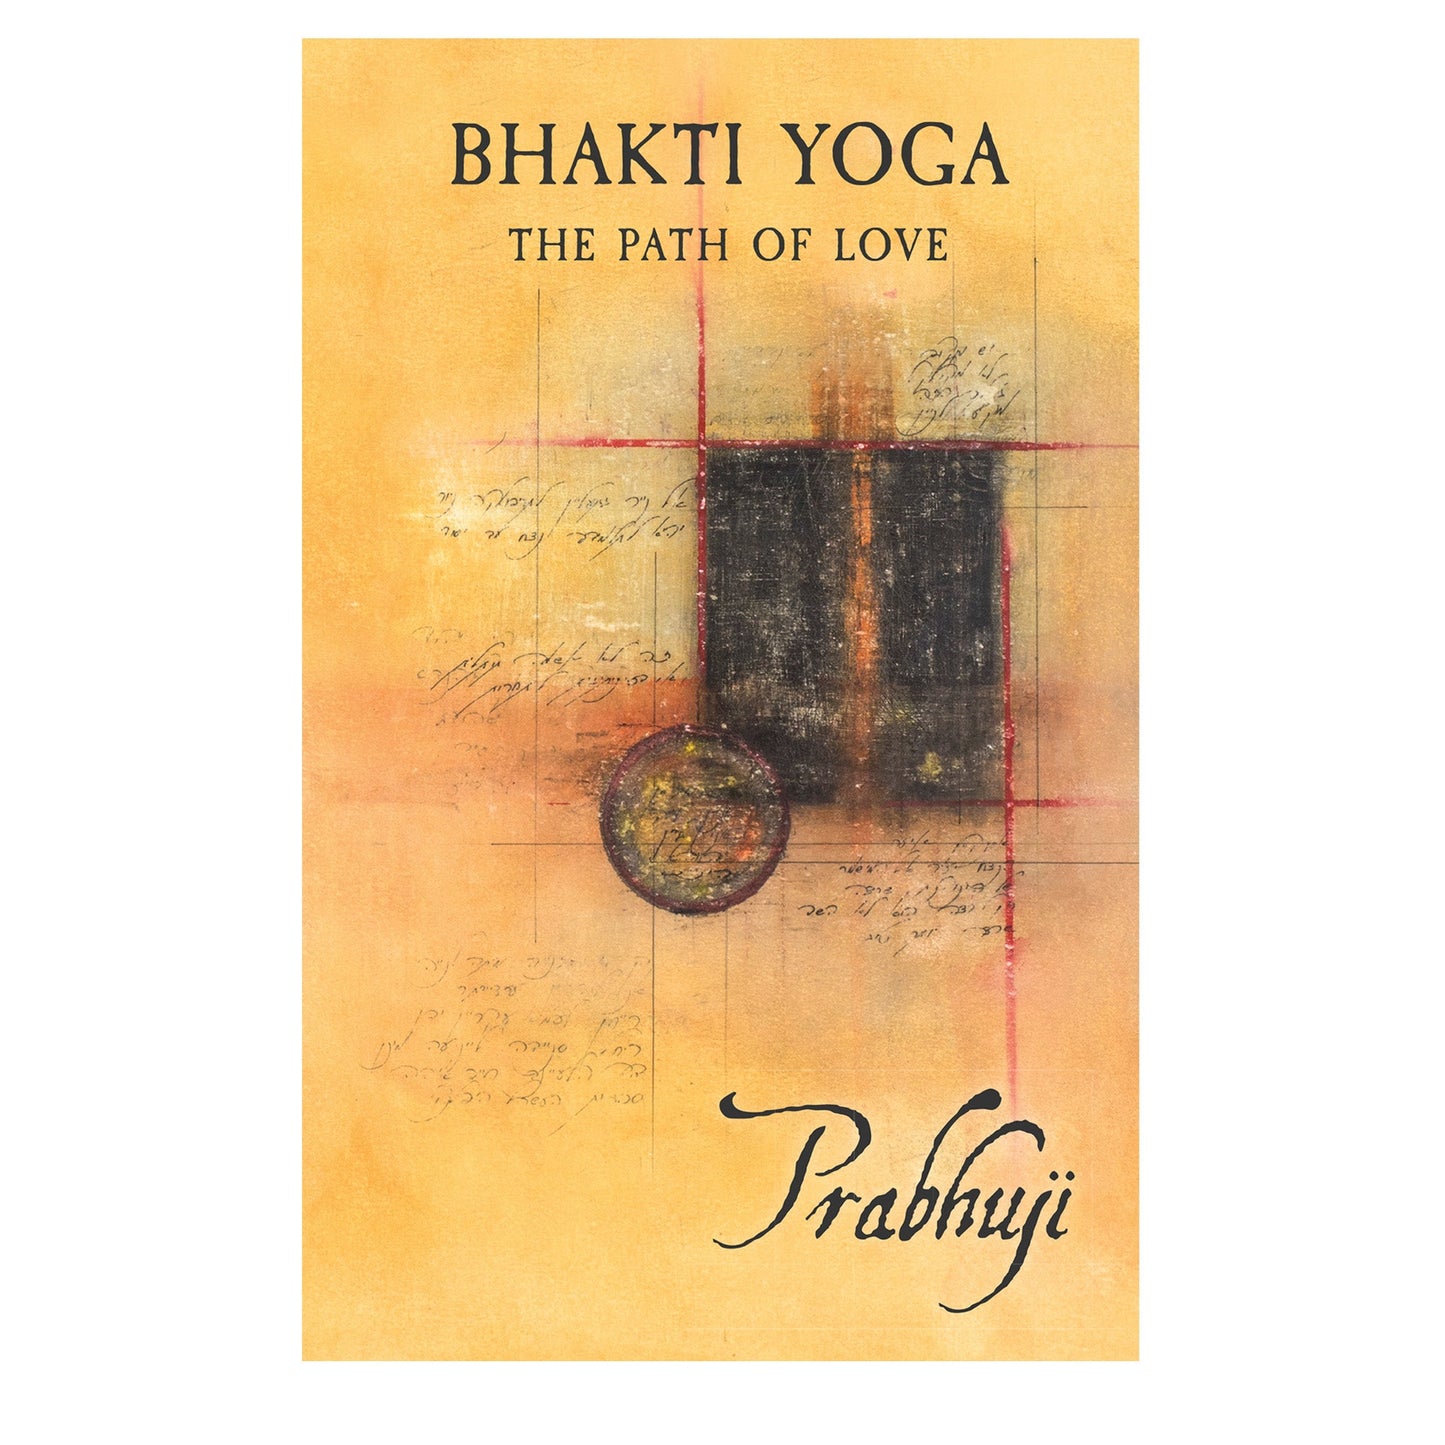 Book Bhakti yoga - the path of love by Prabhuji (Paperback- English) - Wholesale and Retail Prabhuji's Gifts